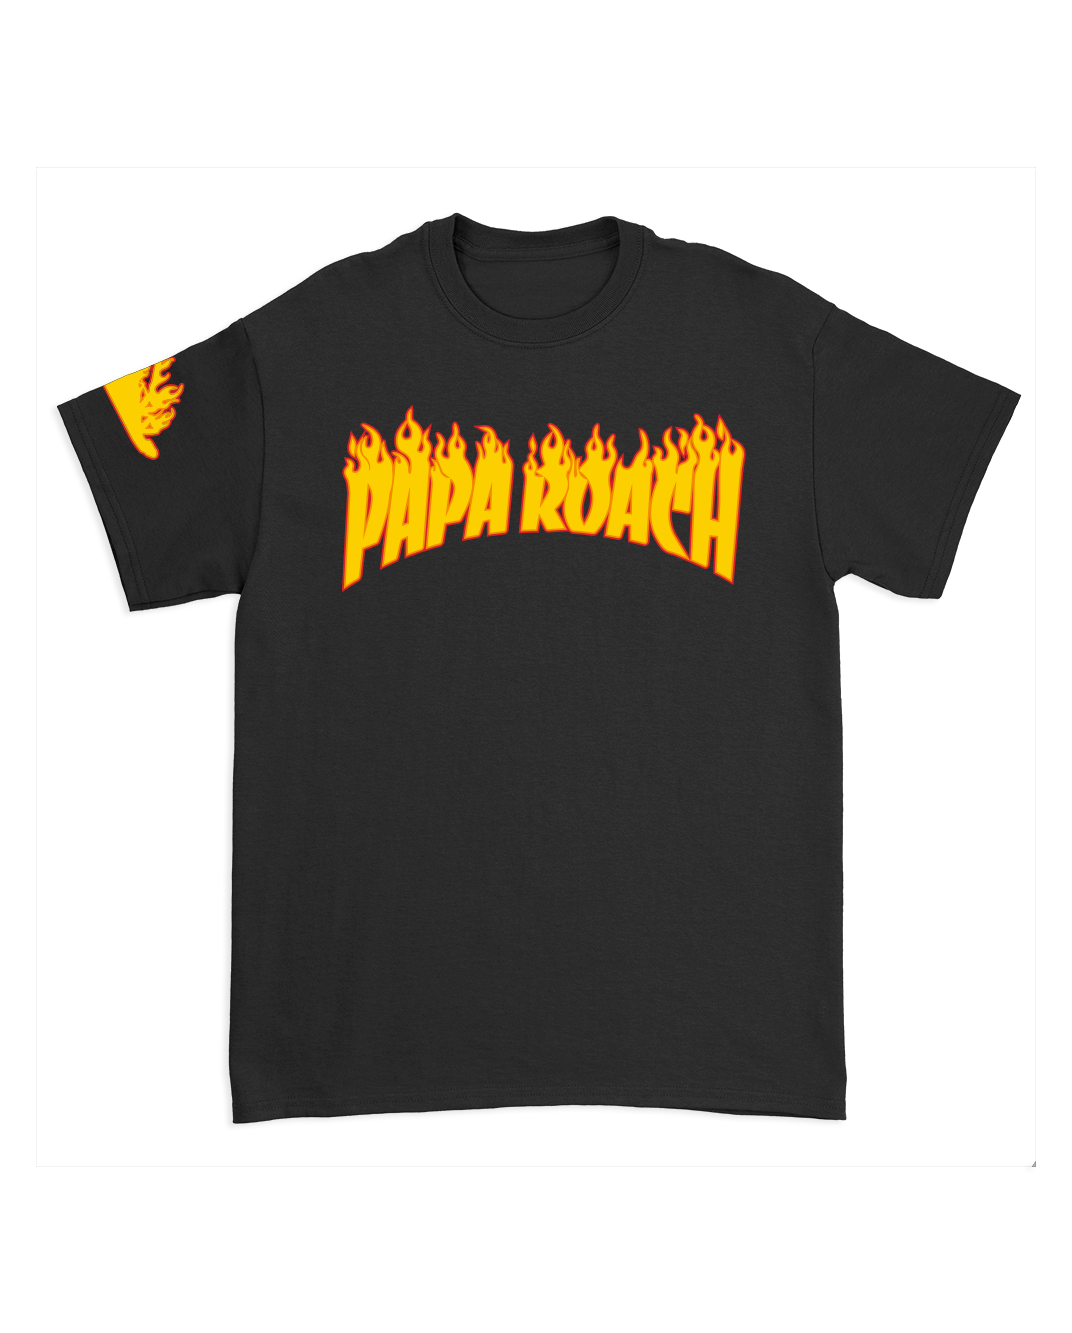 Firestarter T-Shirt (Black)